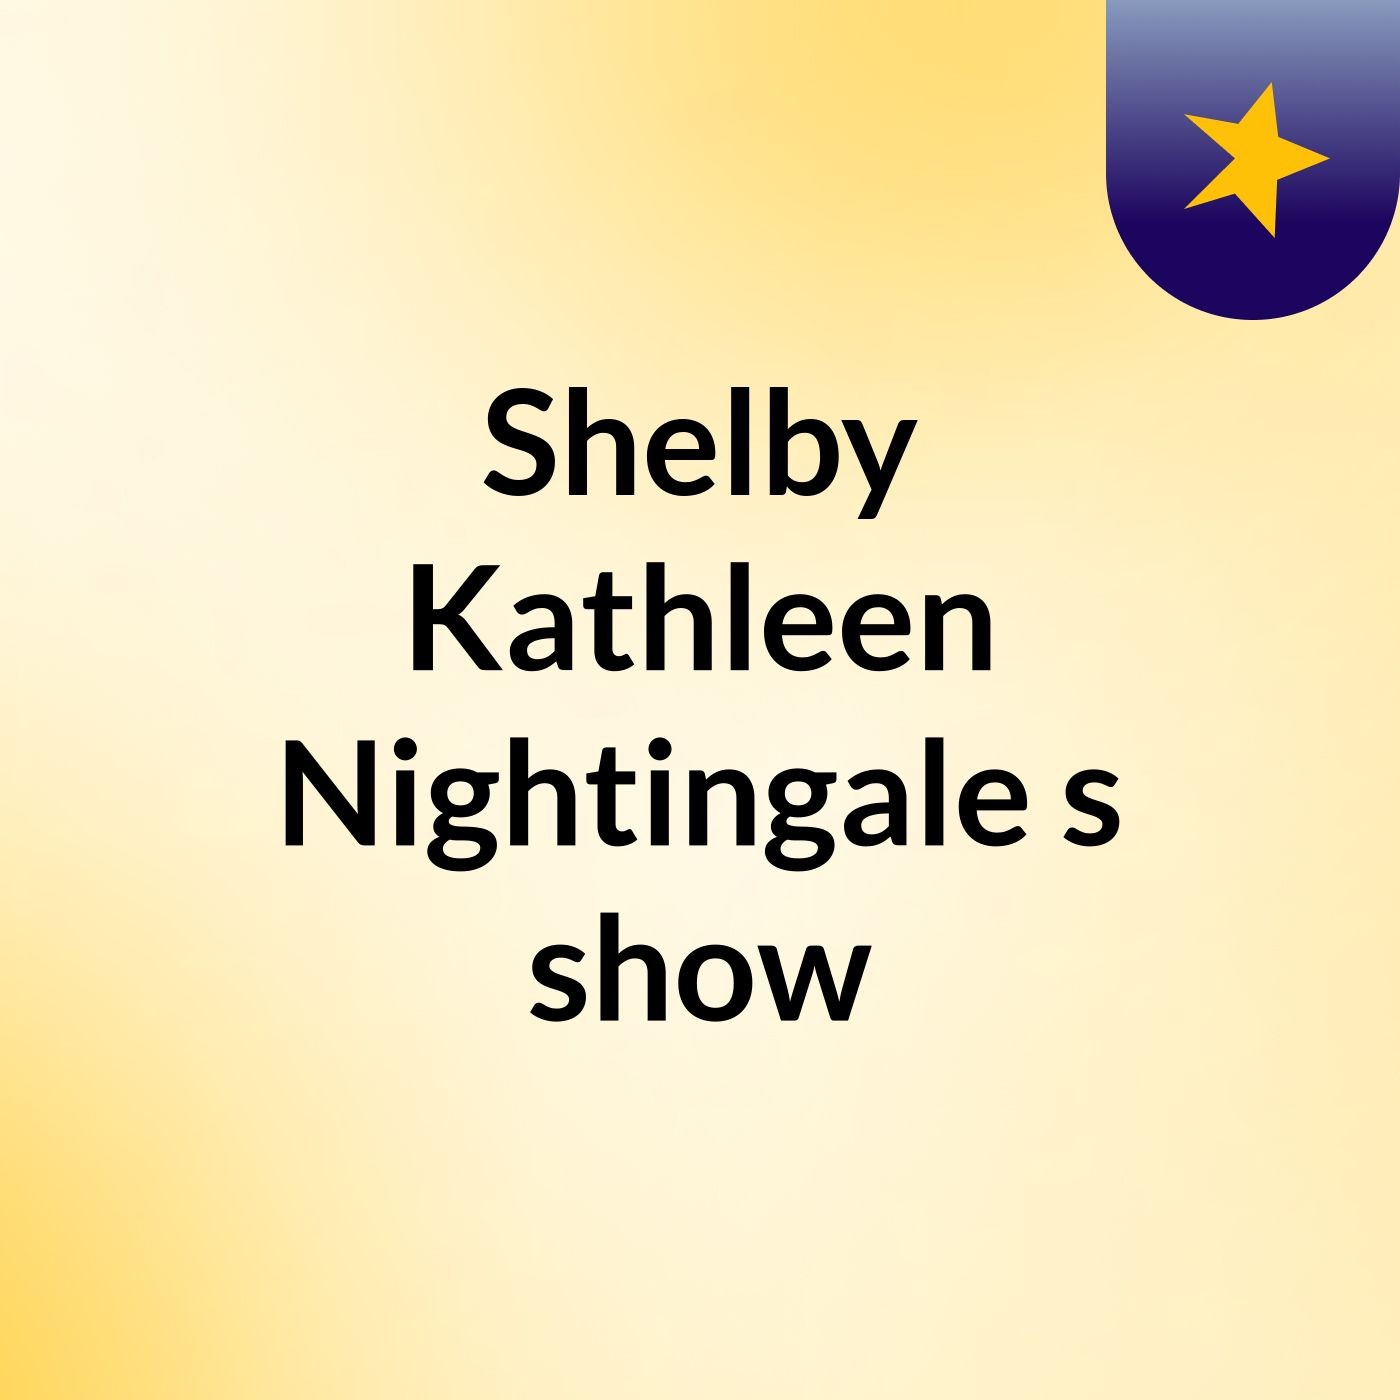 Shelby Kathleen Nightingale's show